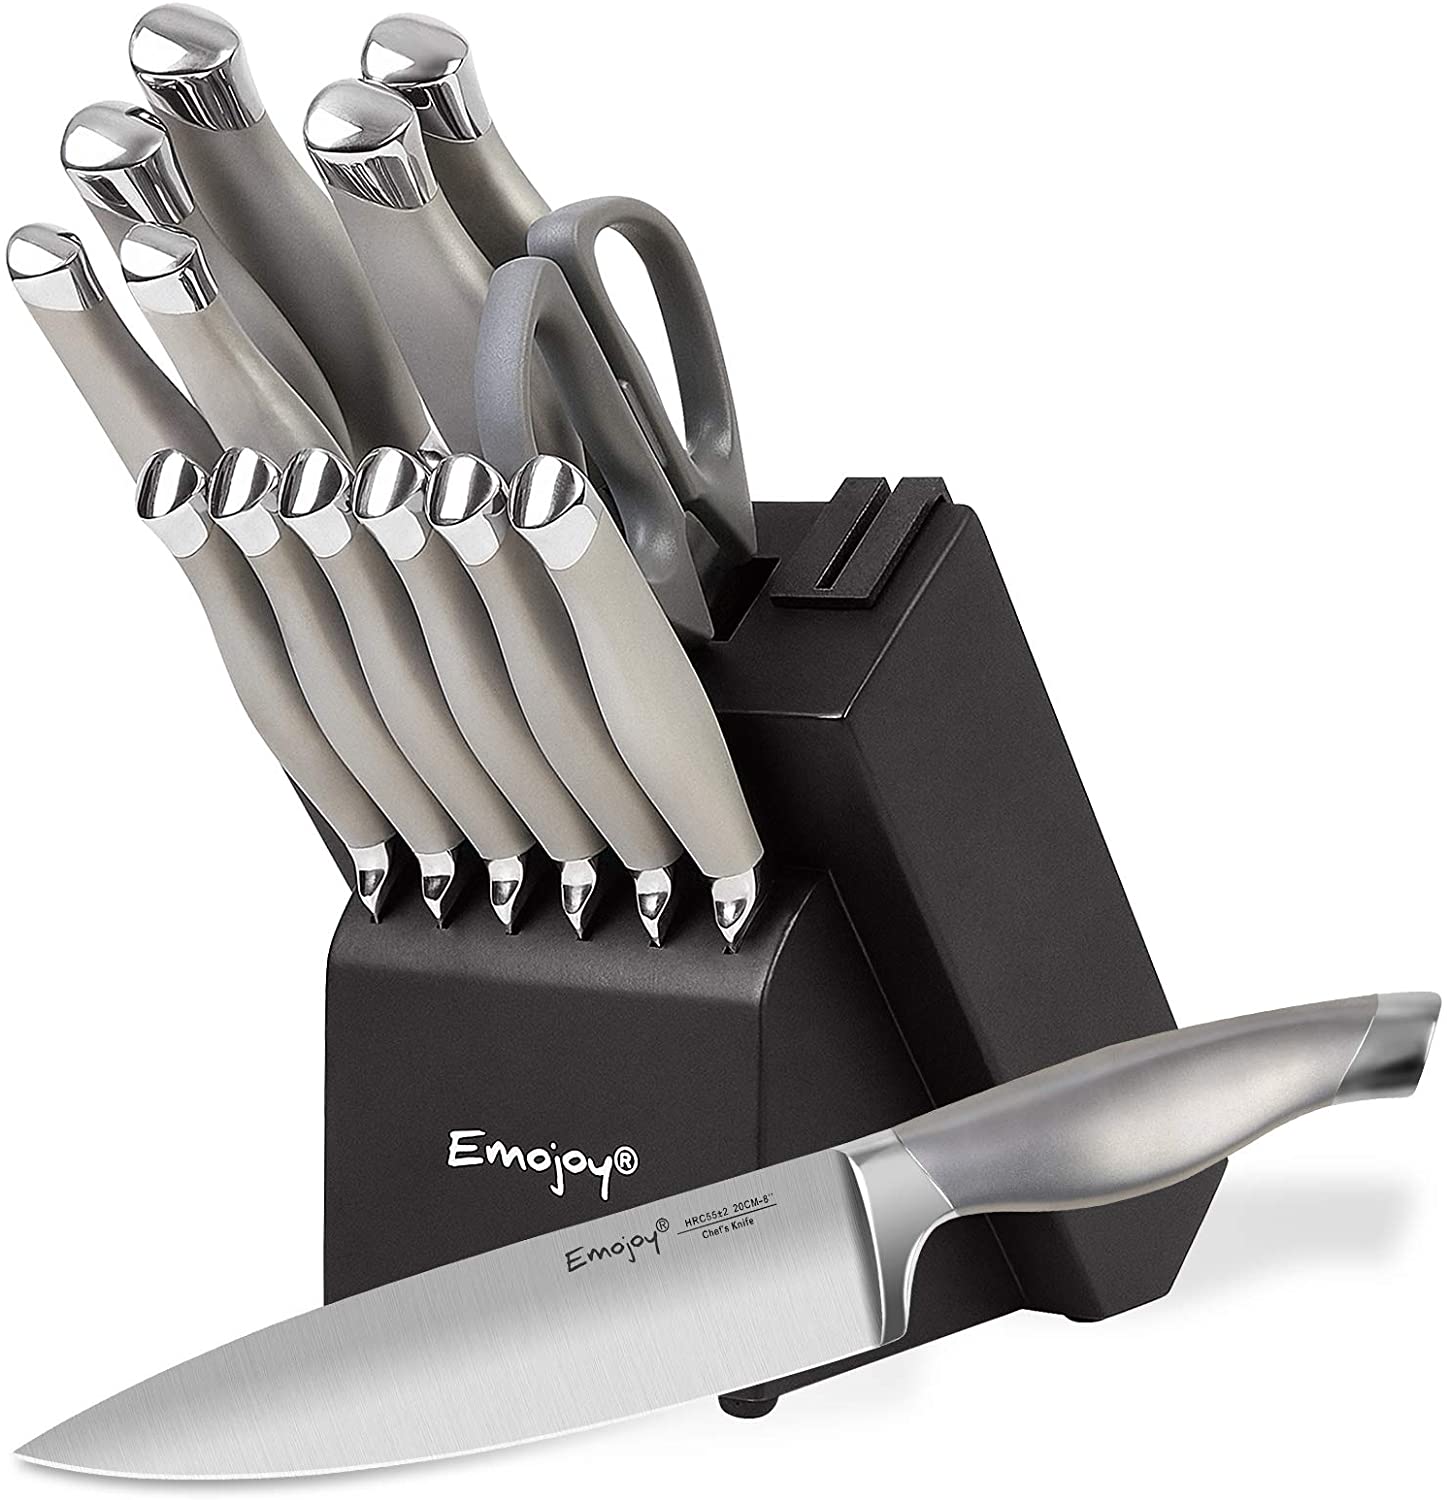 B08J7WLB8W Emojoy Knife Set, 15 Pieces Kitchen Knife Set with Block Wooden, Chef Knife Set with Built-in Sharpener, German Stainless Steel Hollow Handle Knives Grey